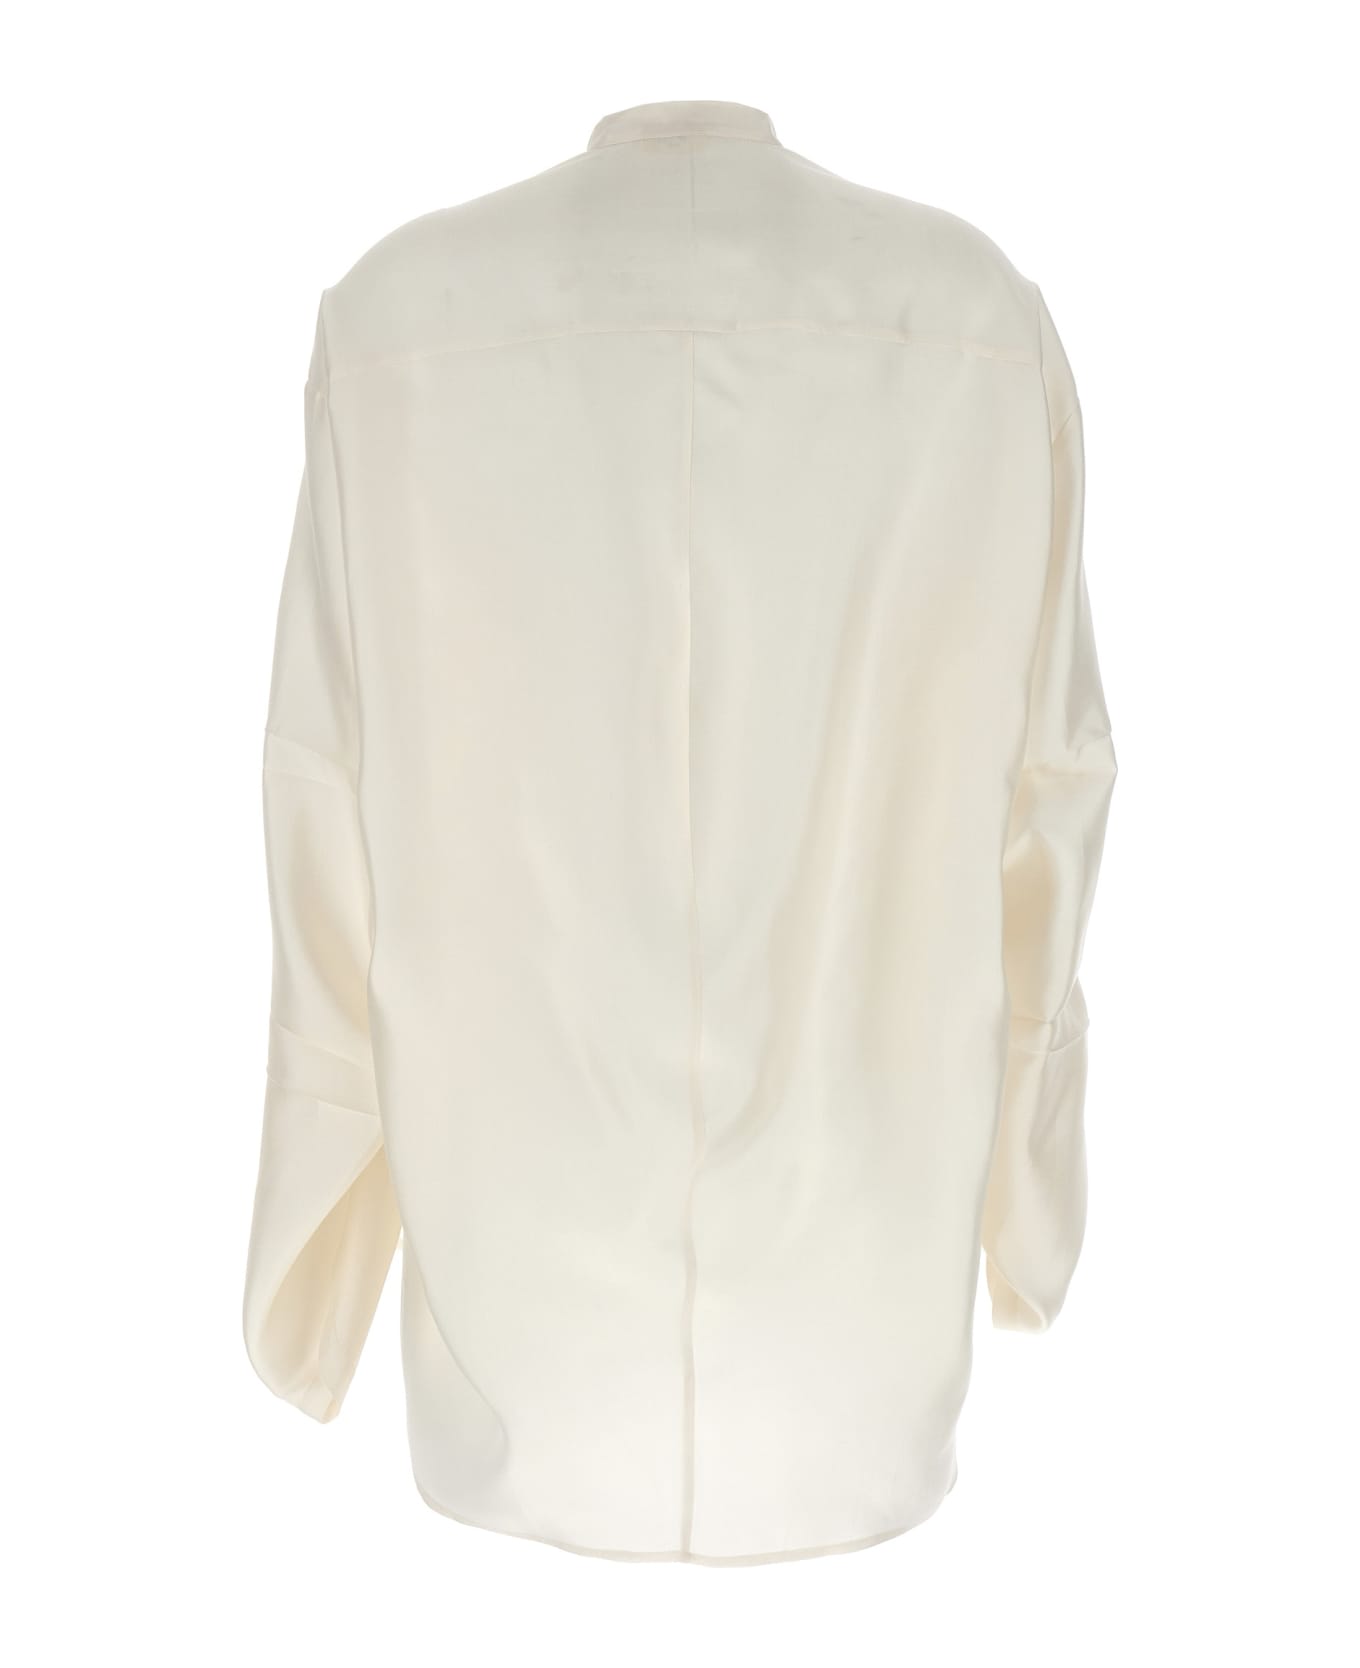 Di.La3 Pari' Curled Sleeve Shirt - White シャツ